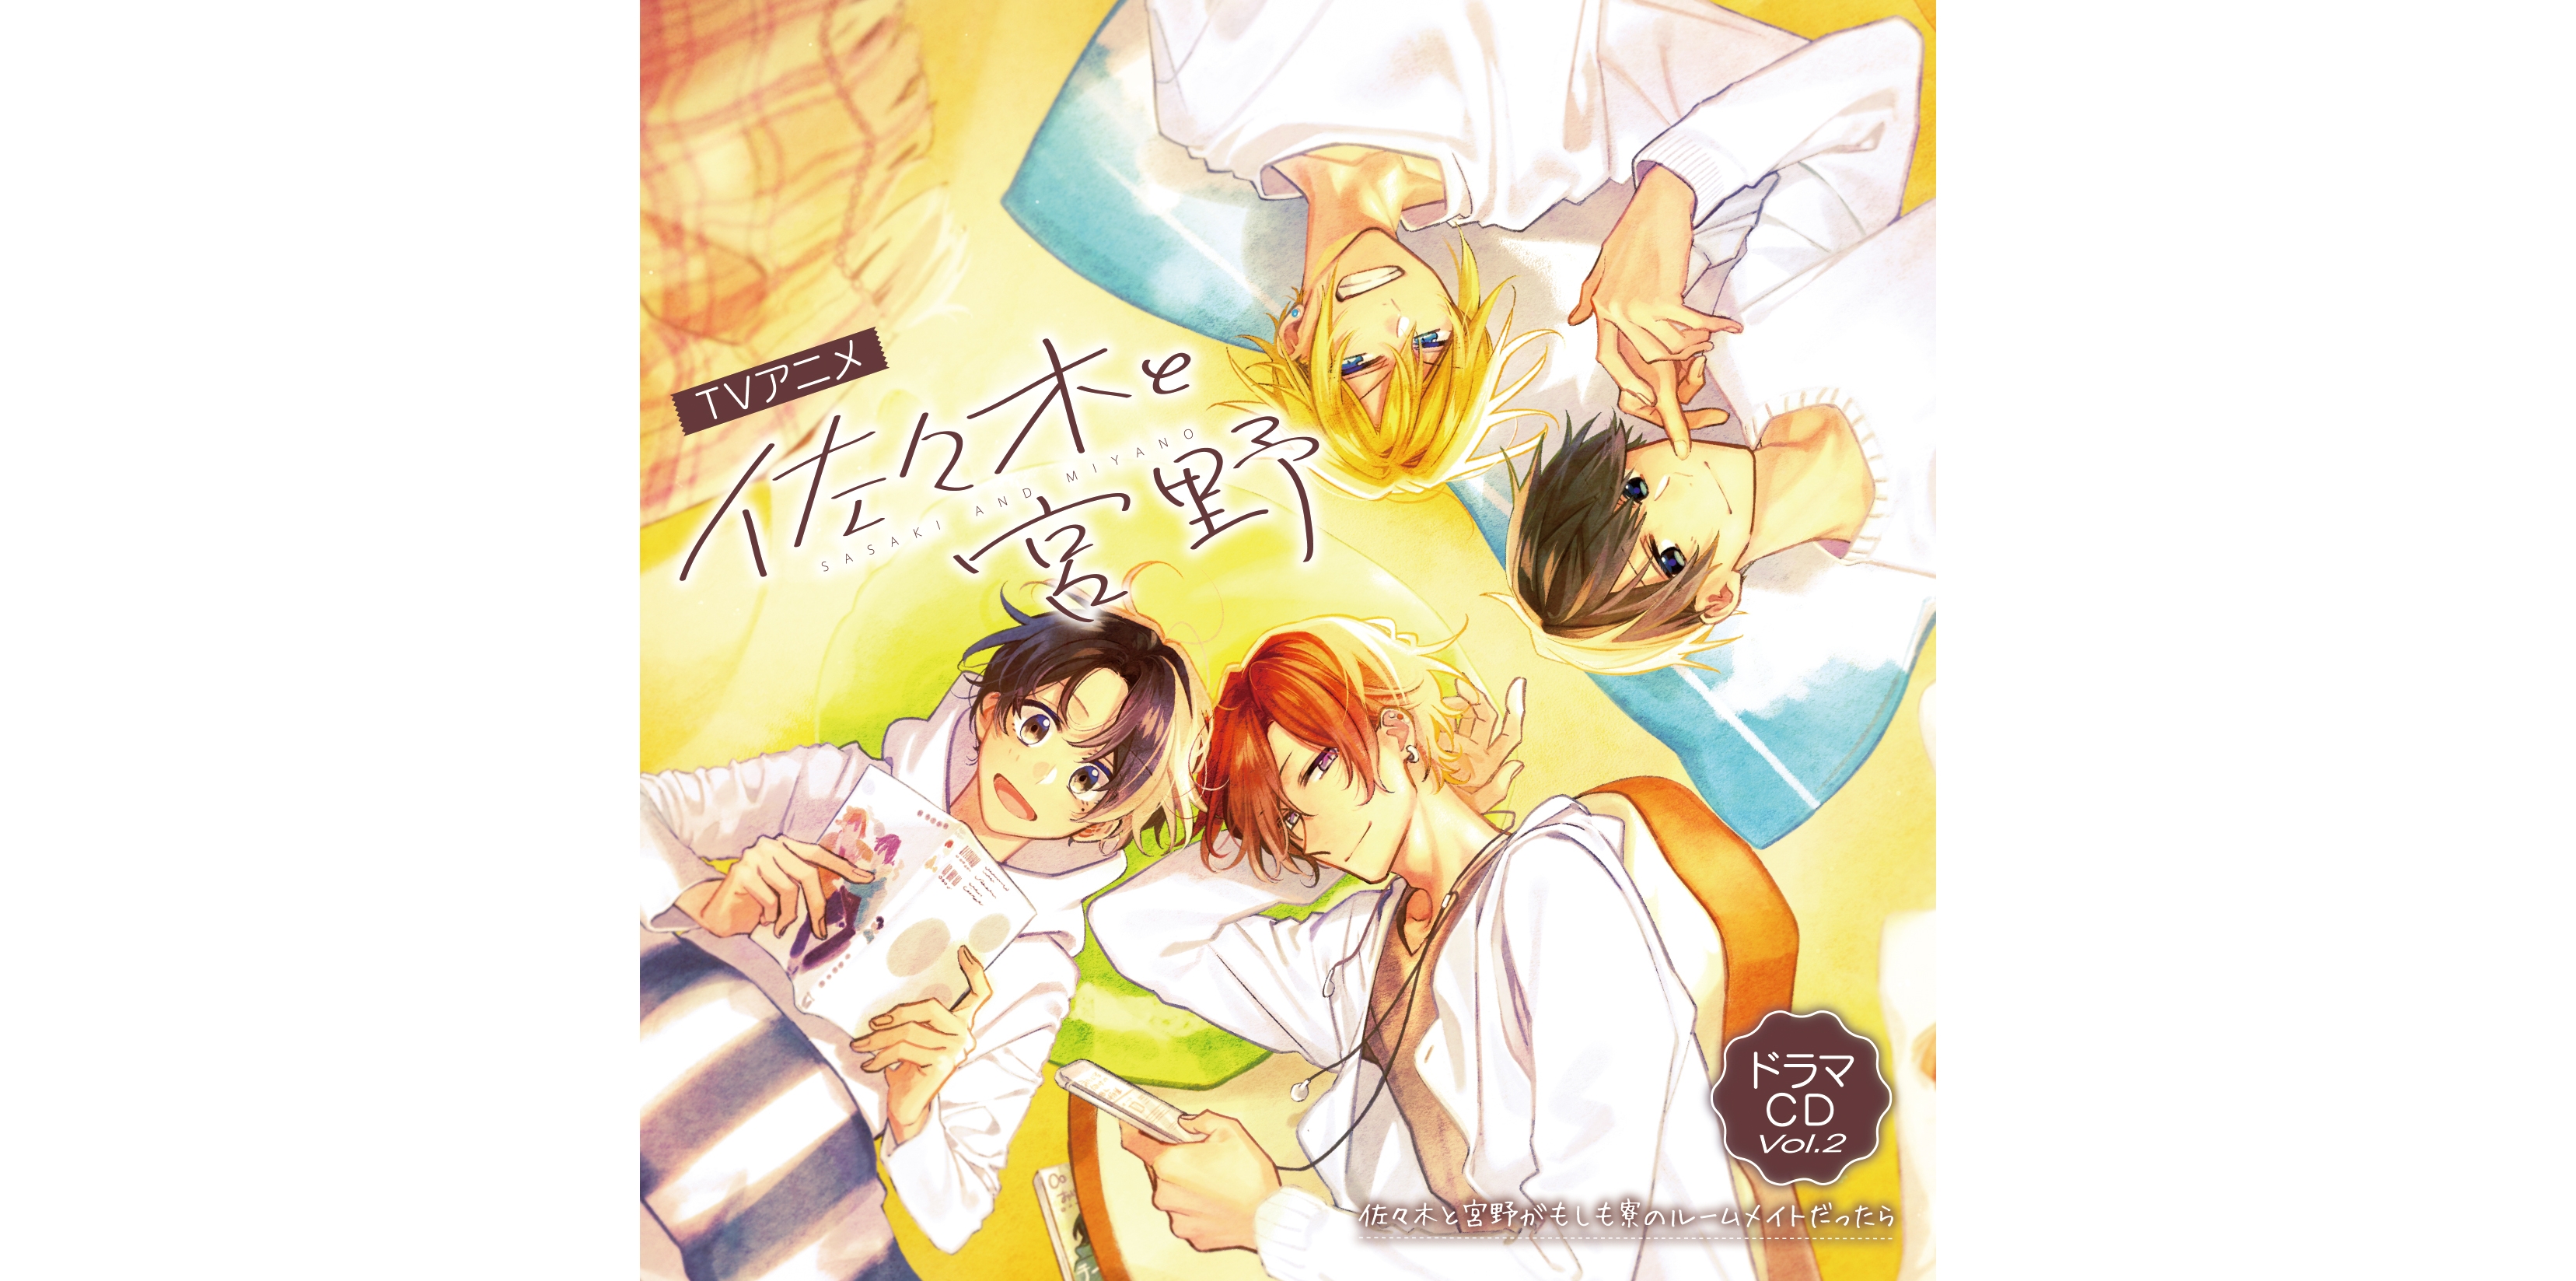 SASAKI AND MIYANO japanese manga book Vol 1 to 9 set comic sho harusono  anime